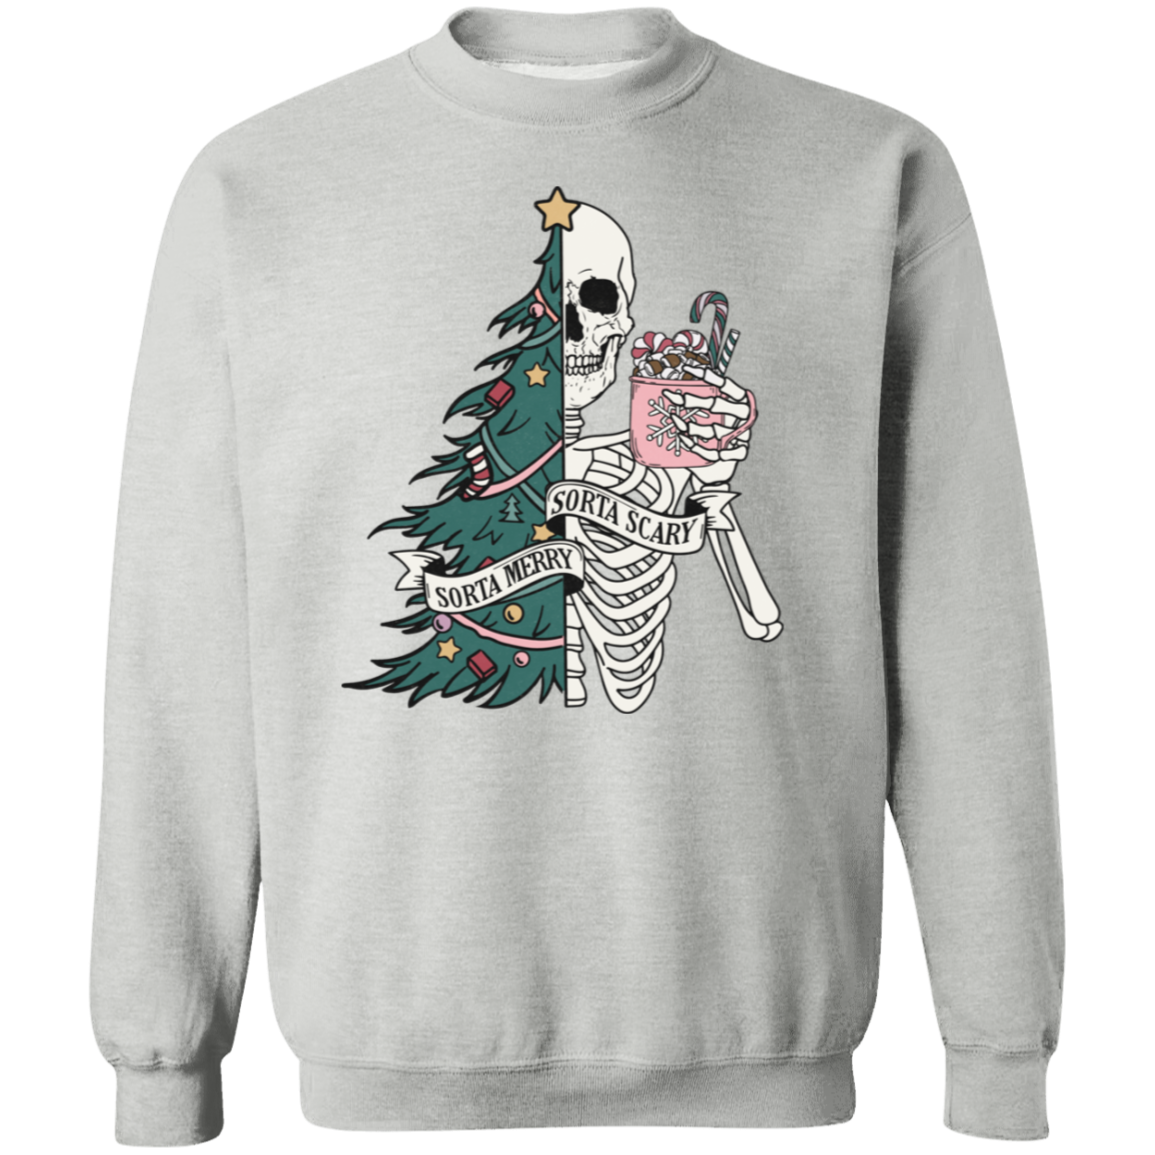 Christmas Tree, Dead Inside Skeleton - Unisex Ugly Sweatshirt, Christmas, Winter